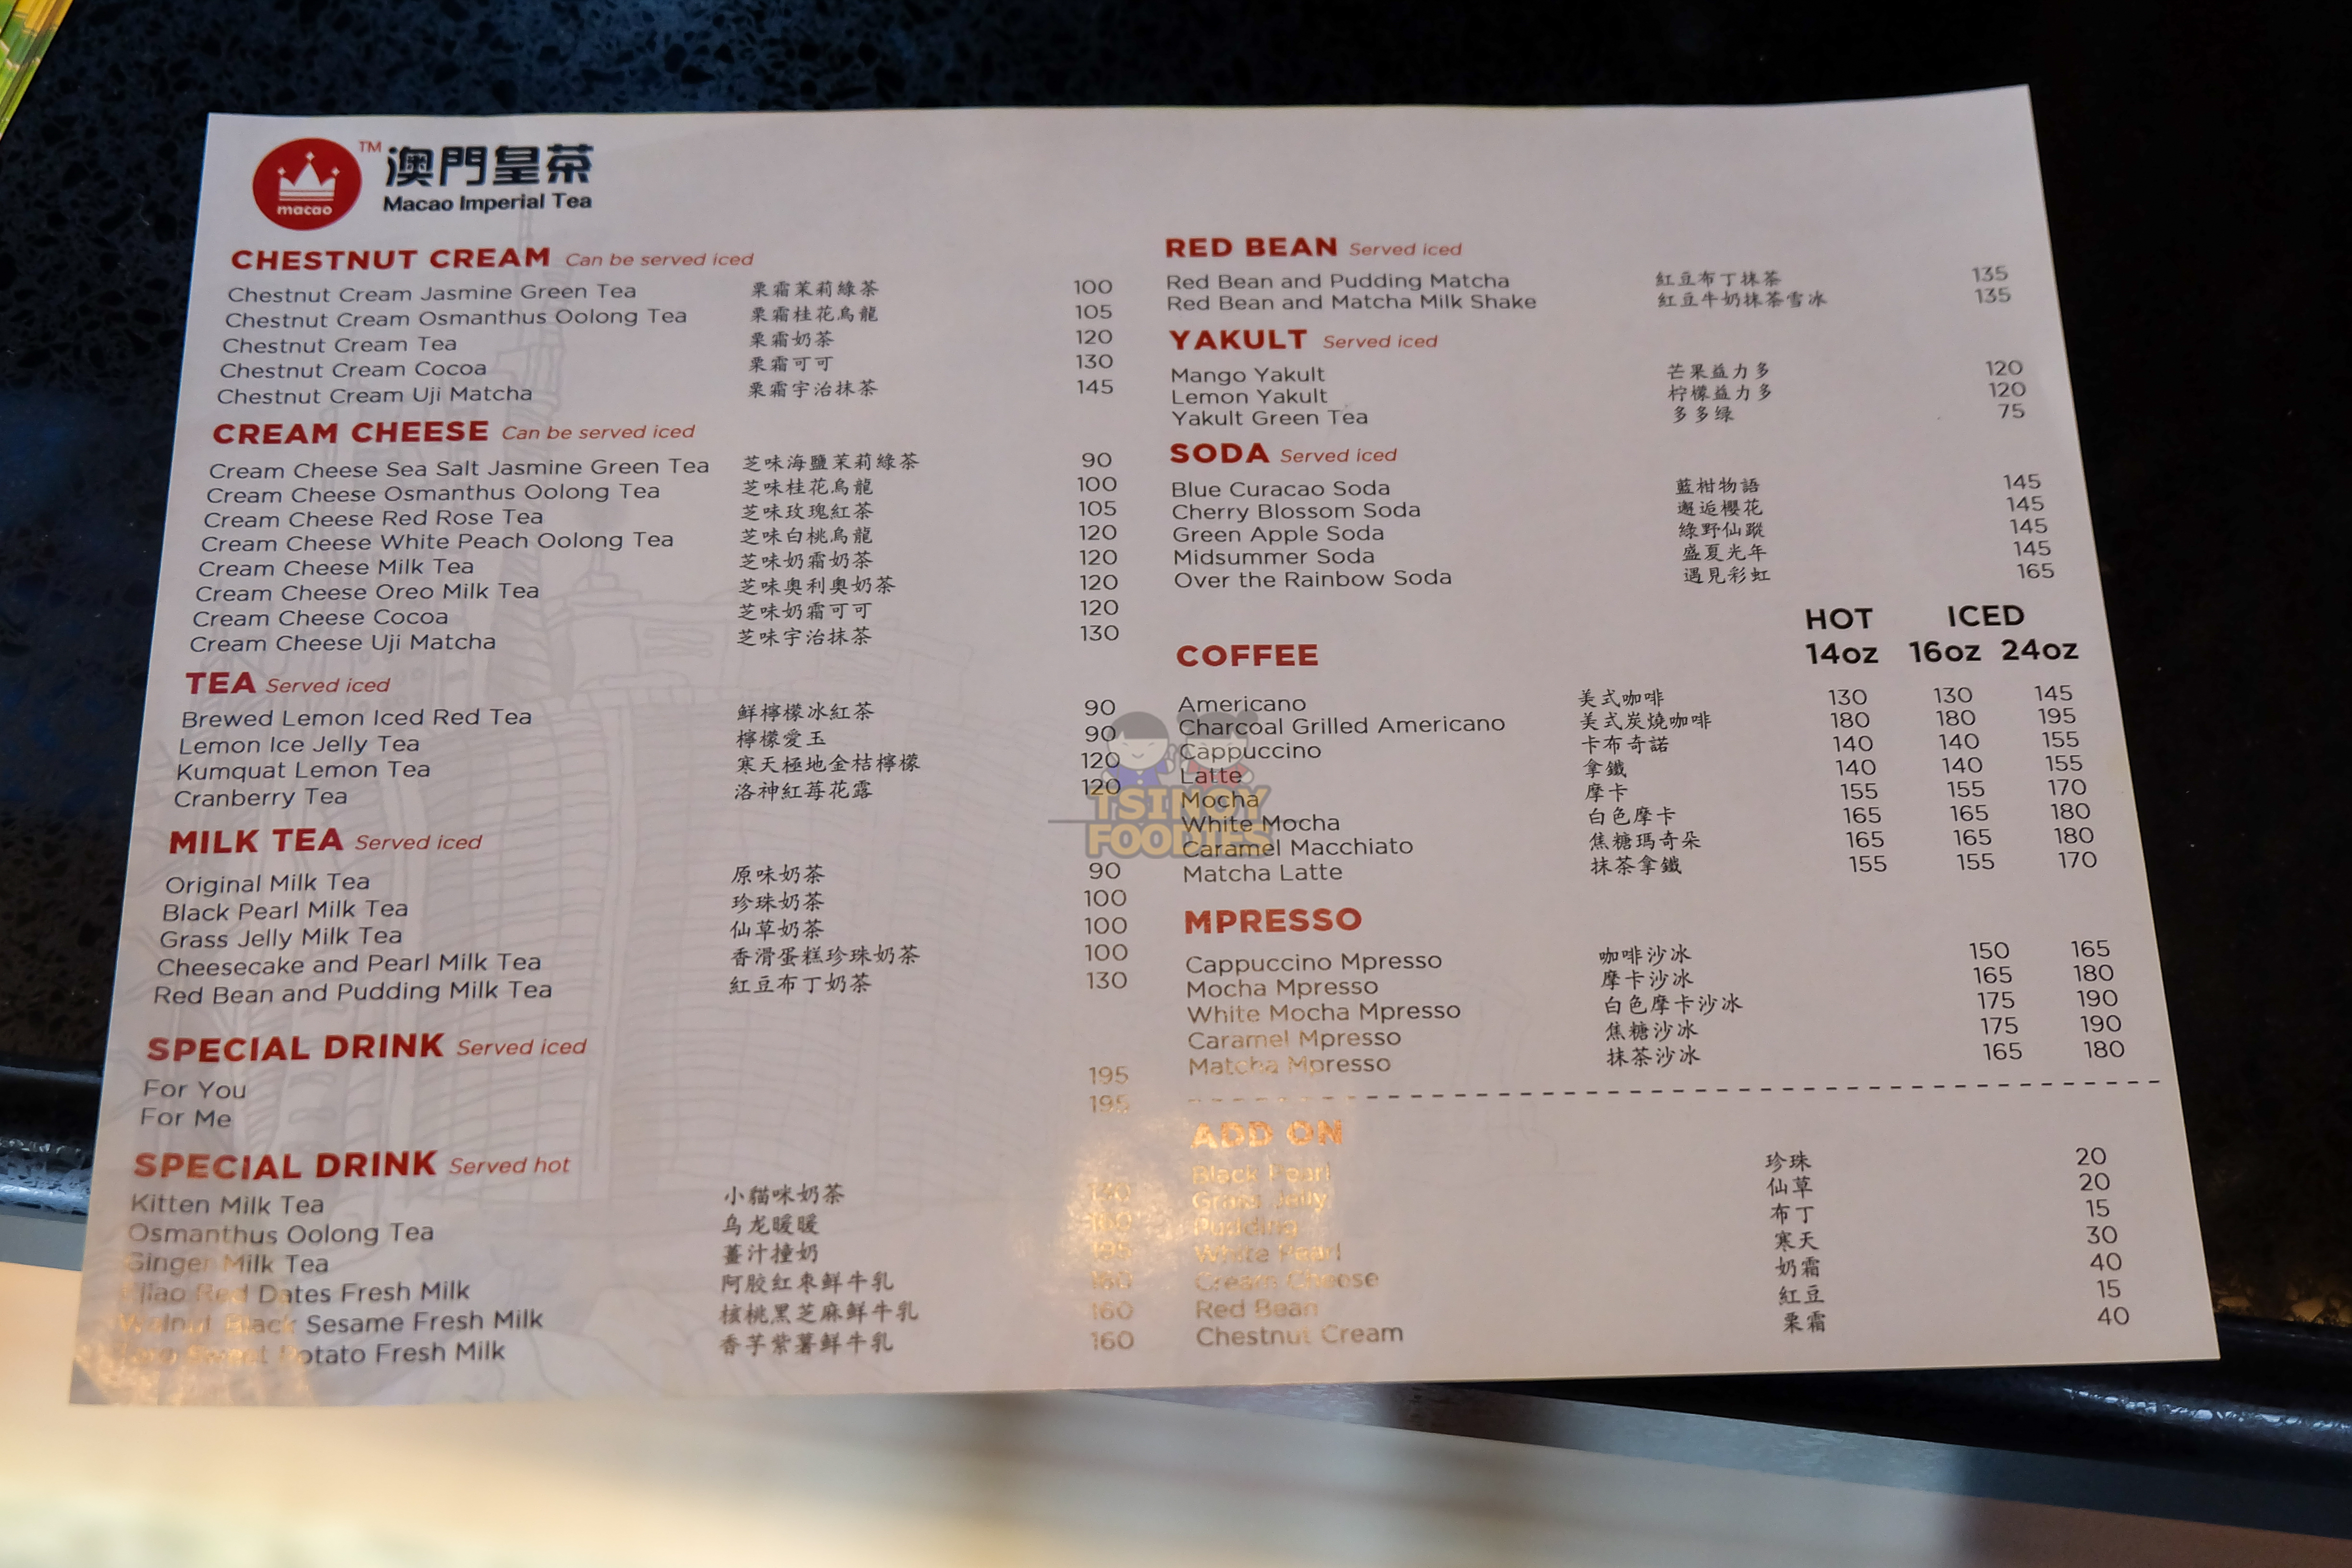 macao imperial tea menu